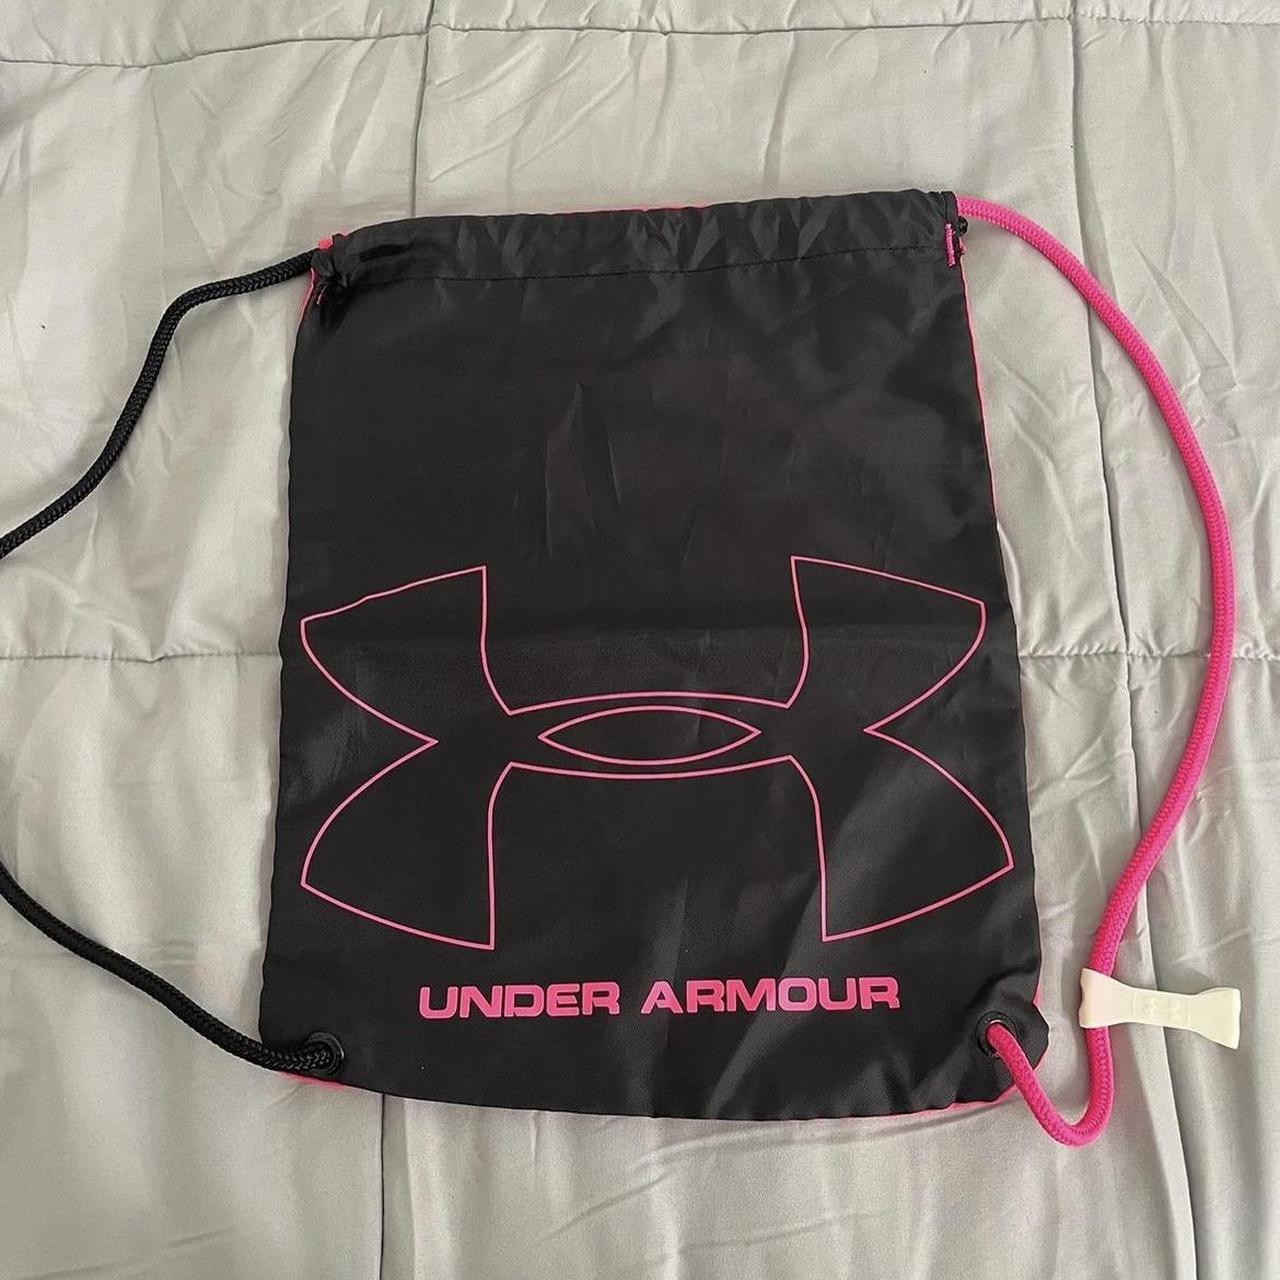 Under armour cinch bag 2 sided color black and pink - Depop